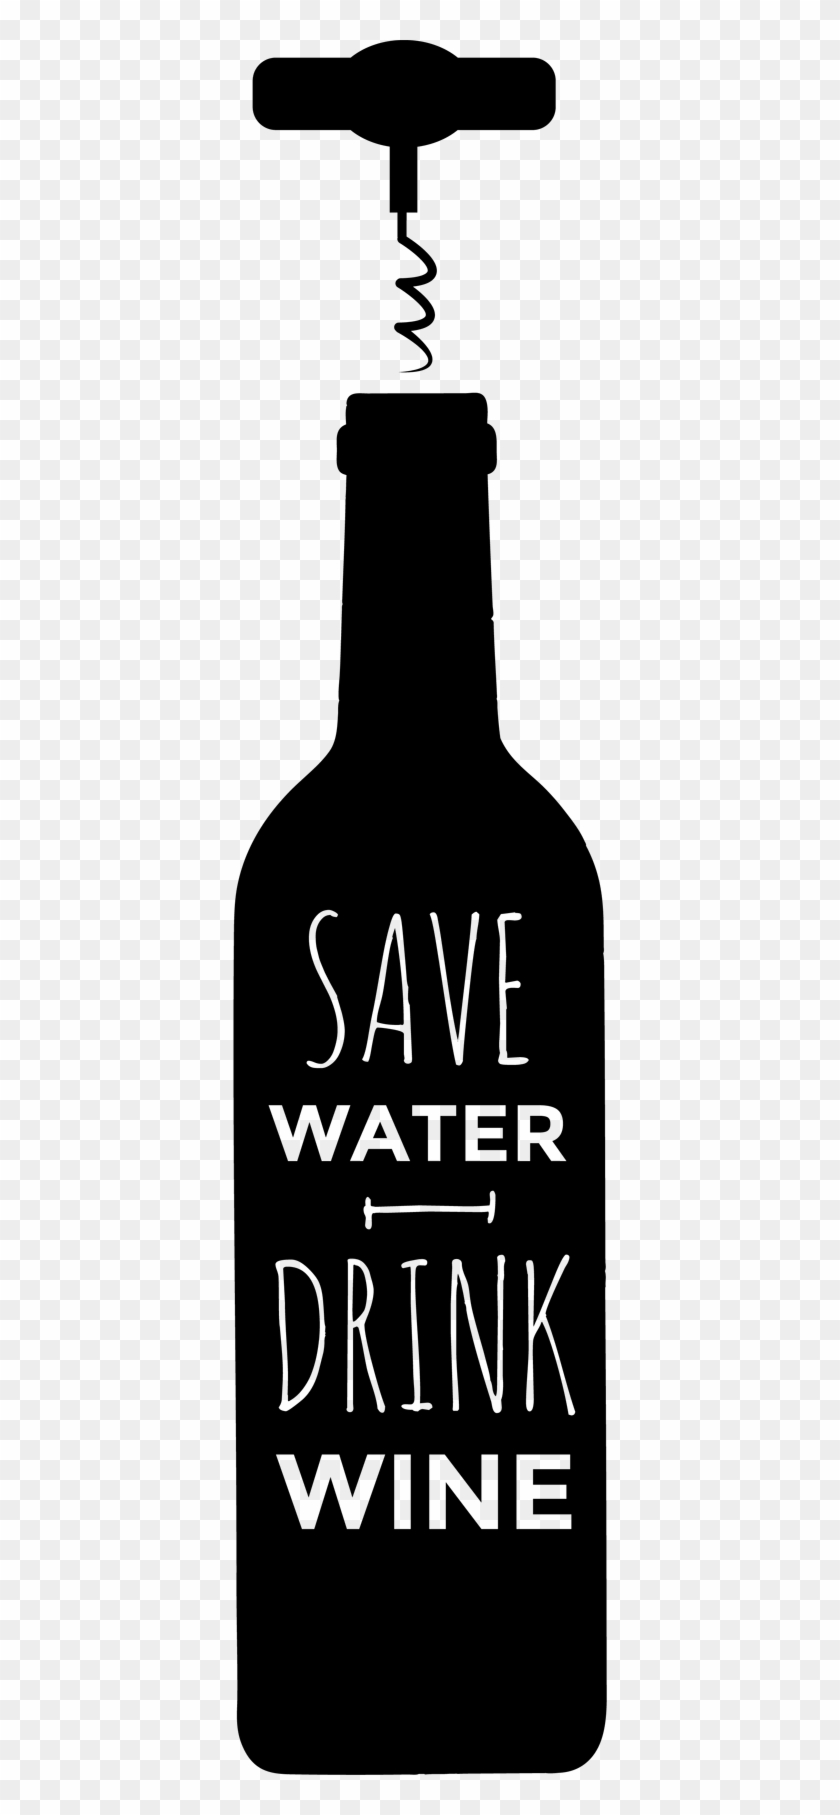 Save Water Drink Wine Wall Sticker - Bottle Clipart #1642635